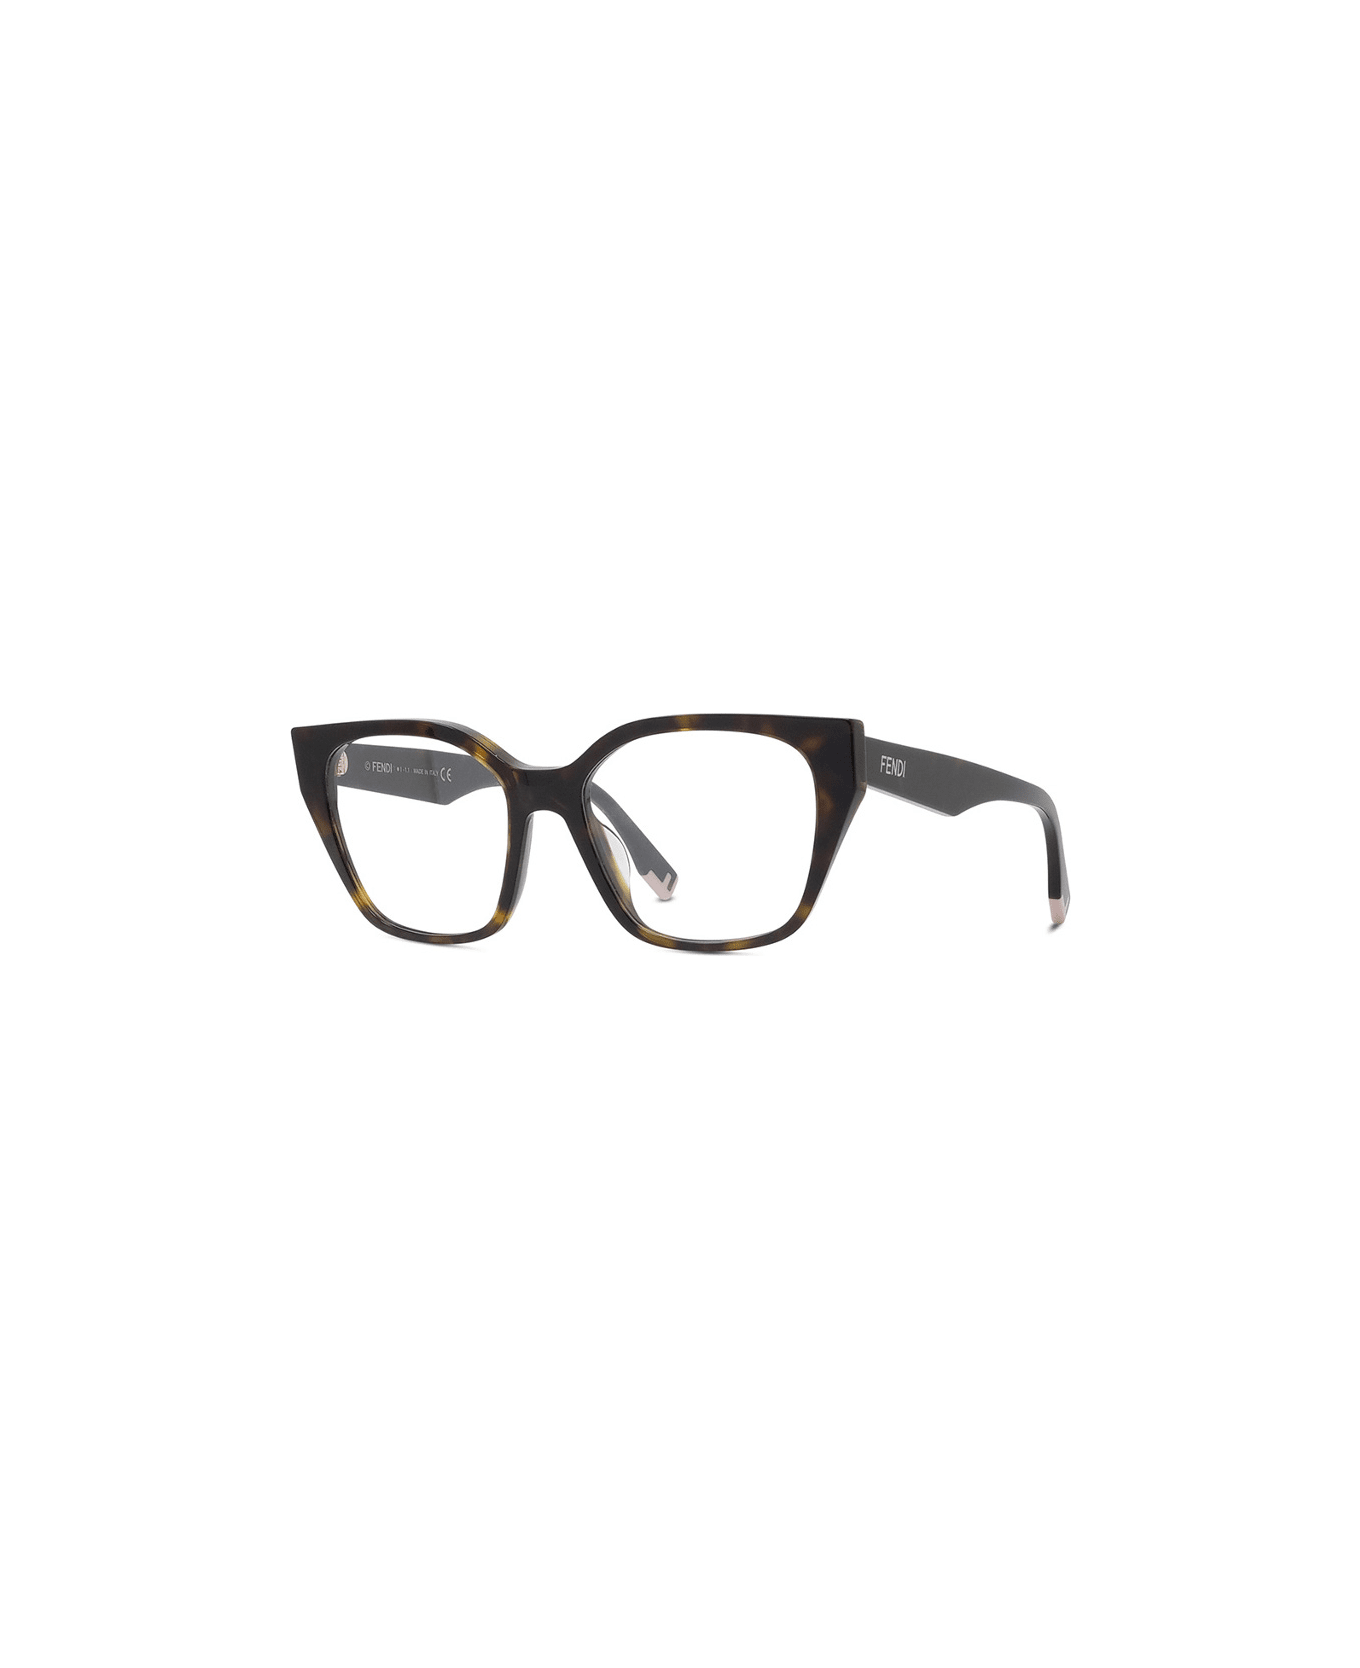 Fendi Eyewear FE50001i 052 Glasses - Tartarugato アイウェア